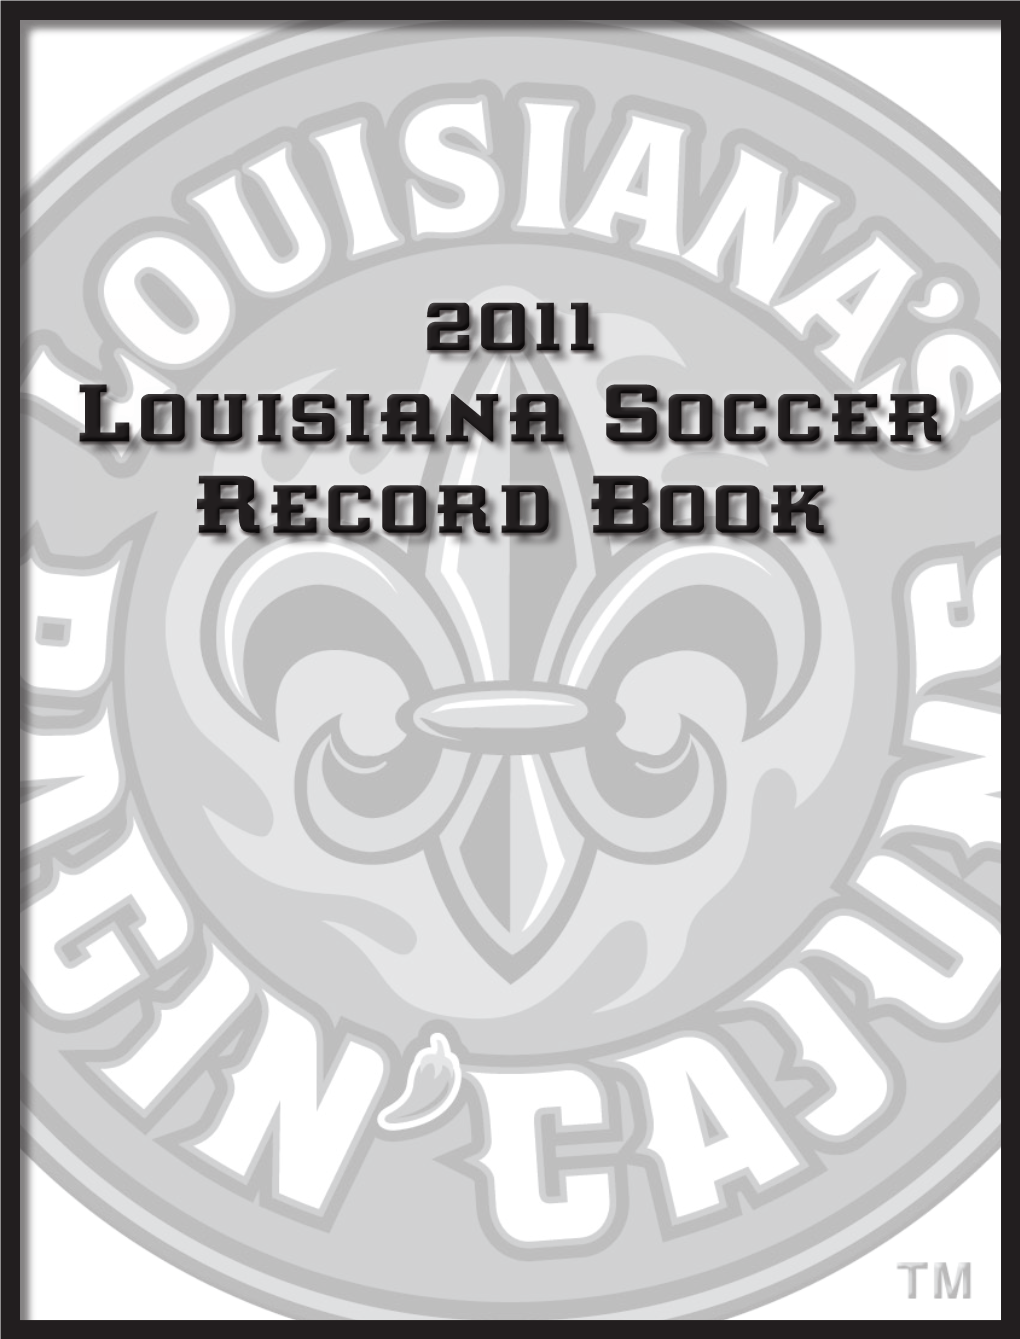 2011 Louisiana Soccer Record Book 2010 RAGIN’ CAJUNS SOCCER RECORD BOOK